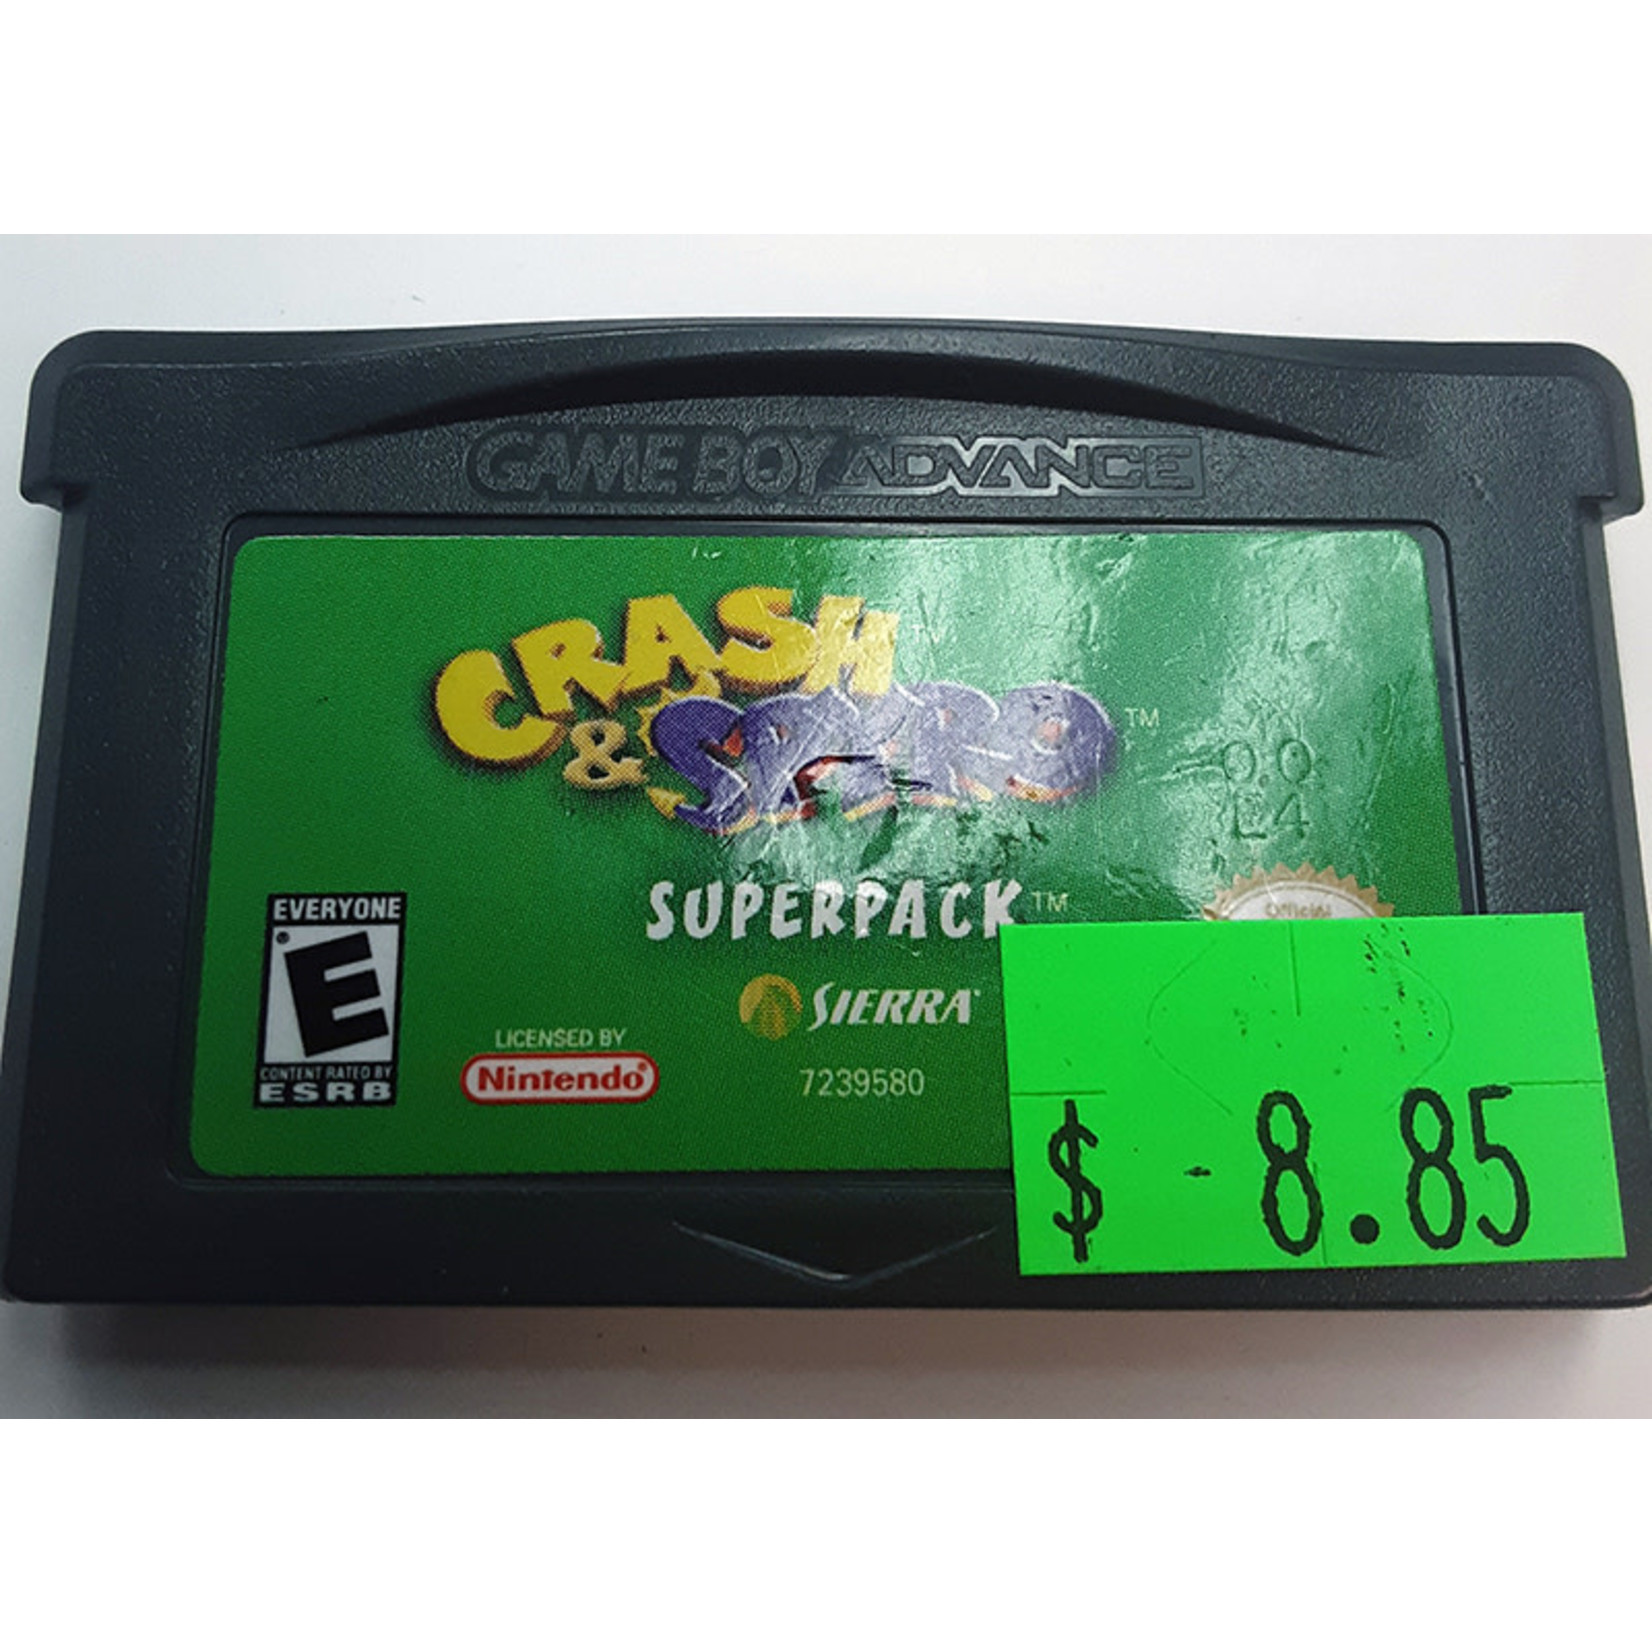 GBAu-Crash & Spyro Superpack (cartridge)